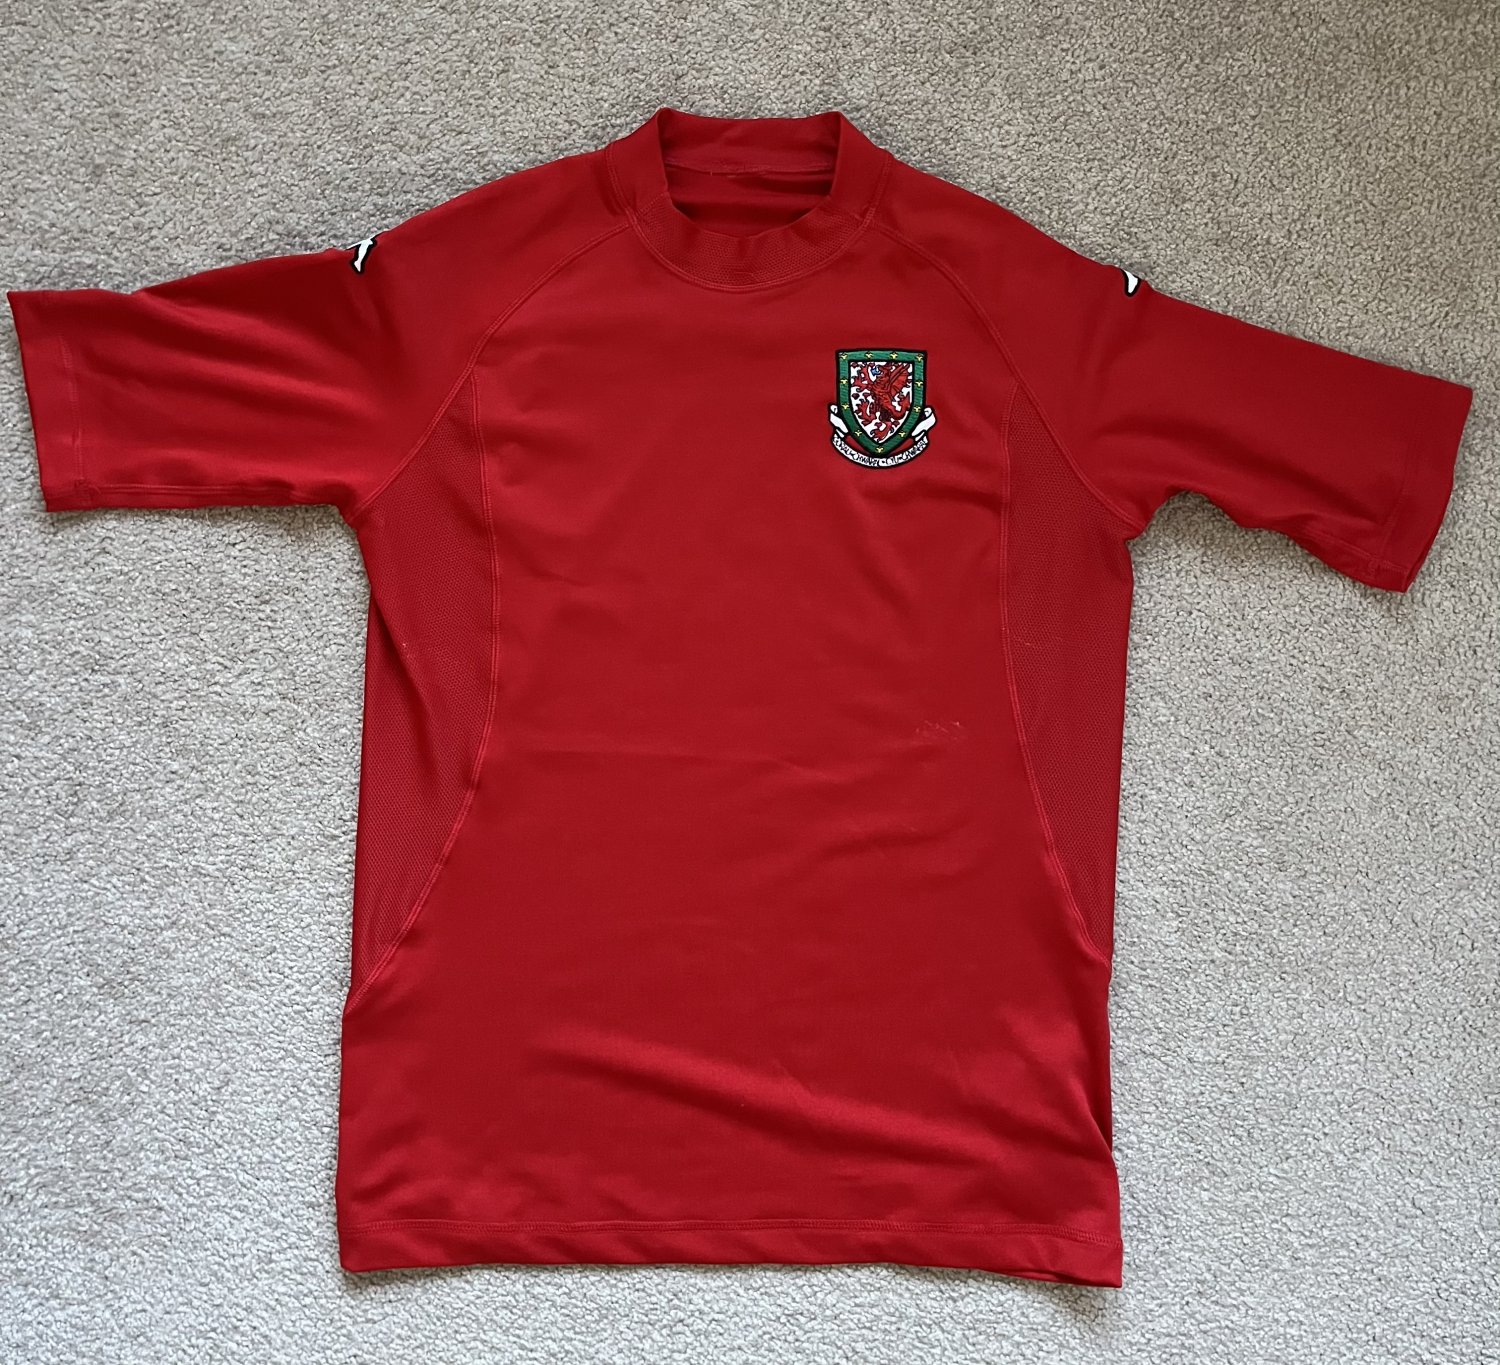 Wales Home football shirt 2004 - 2006.